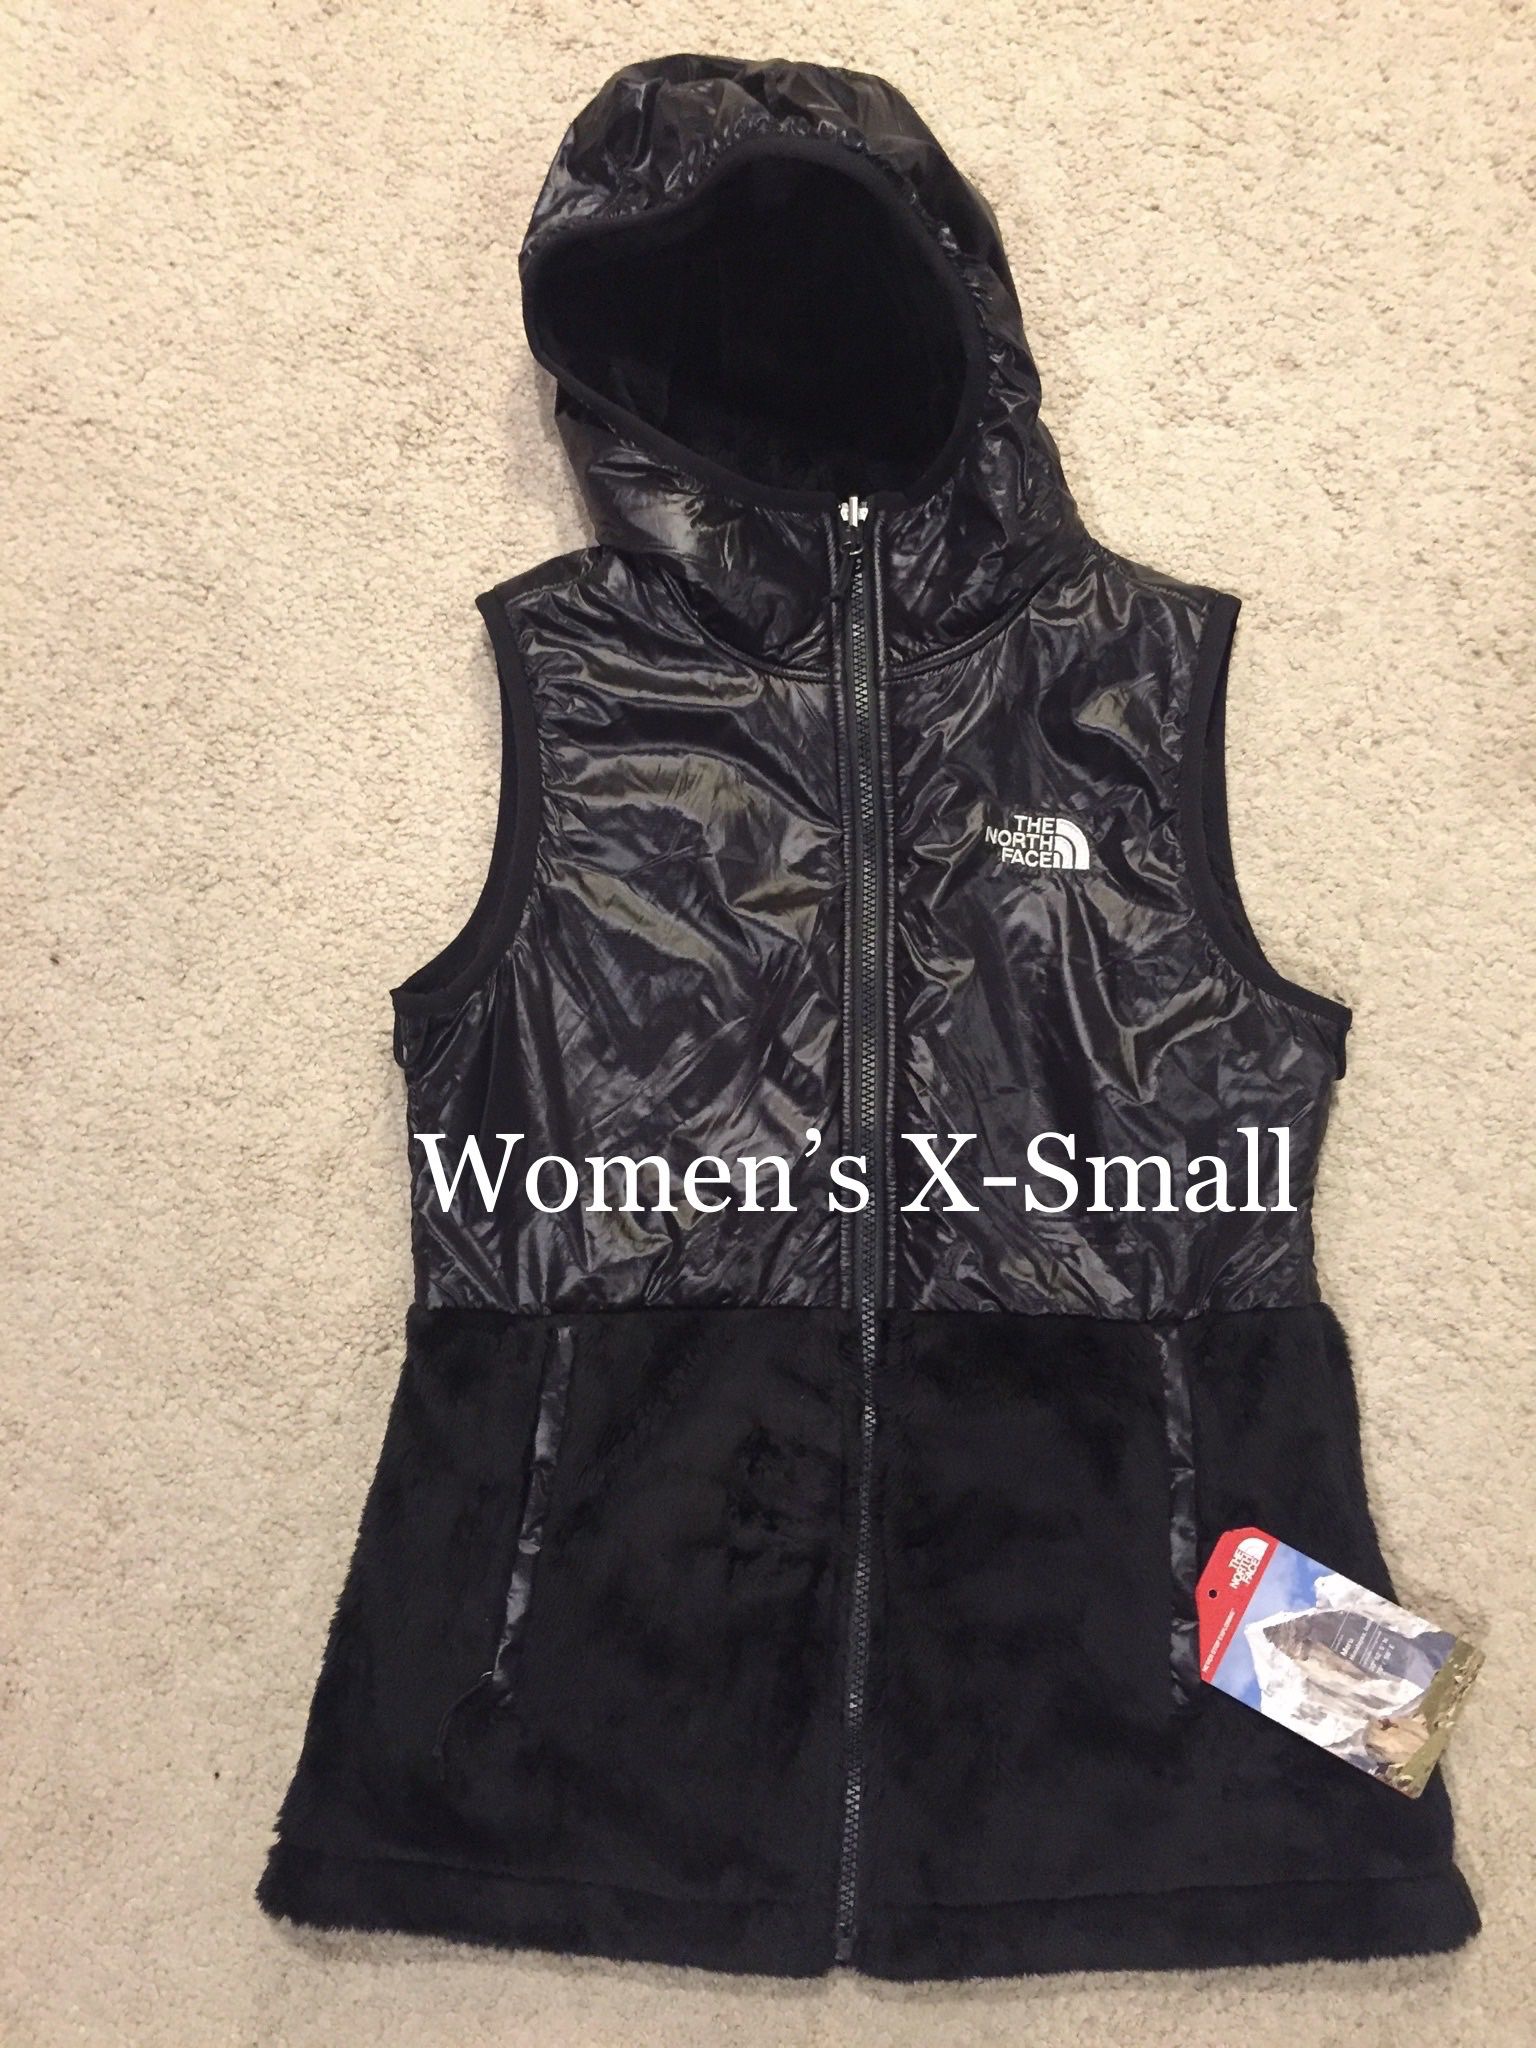 NORTH FACE / SOFT COZY FUZZY Fur Fleece Vest Sweatshirt Jacket Coat / SIZE: Women's X-Small / Brand New w/ Tags!! / Black